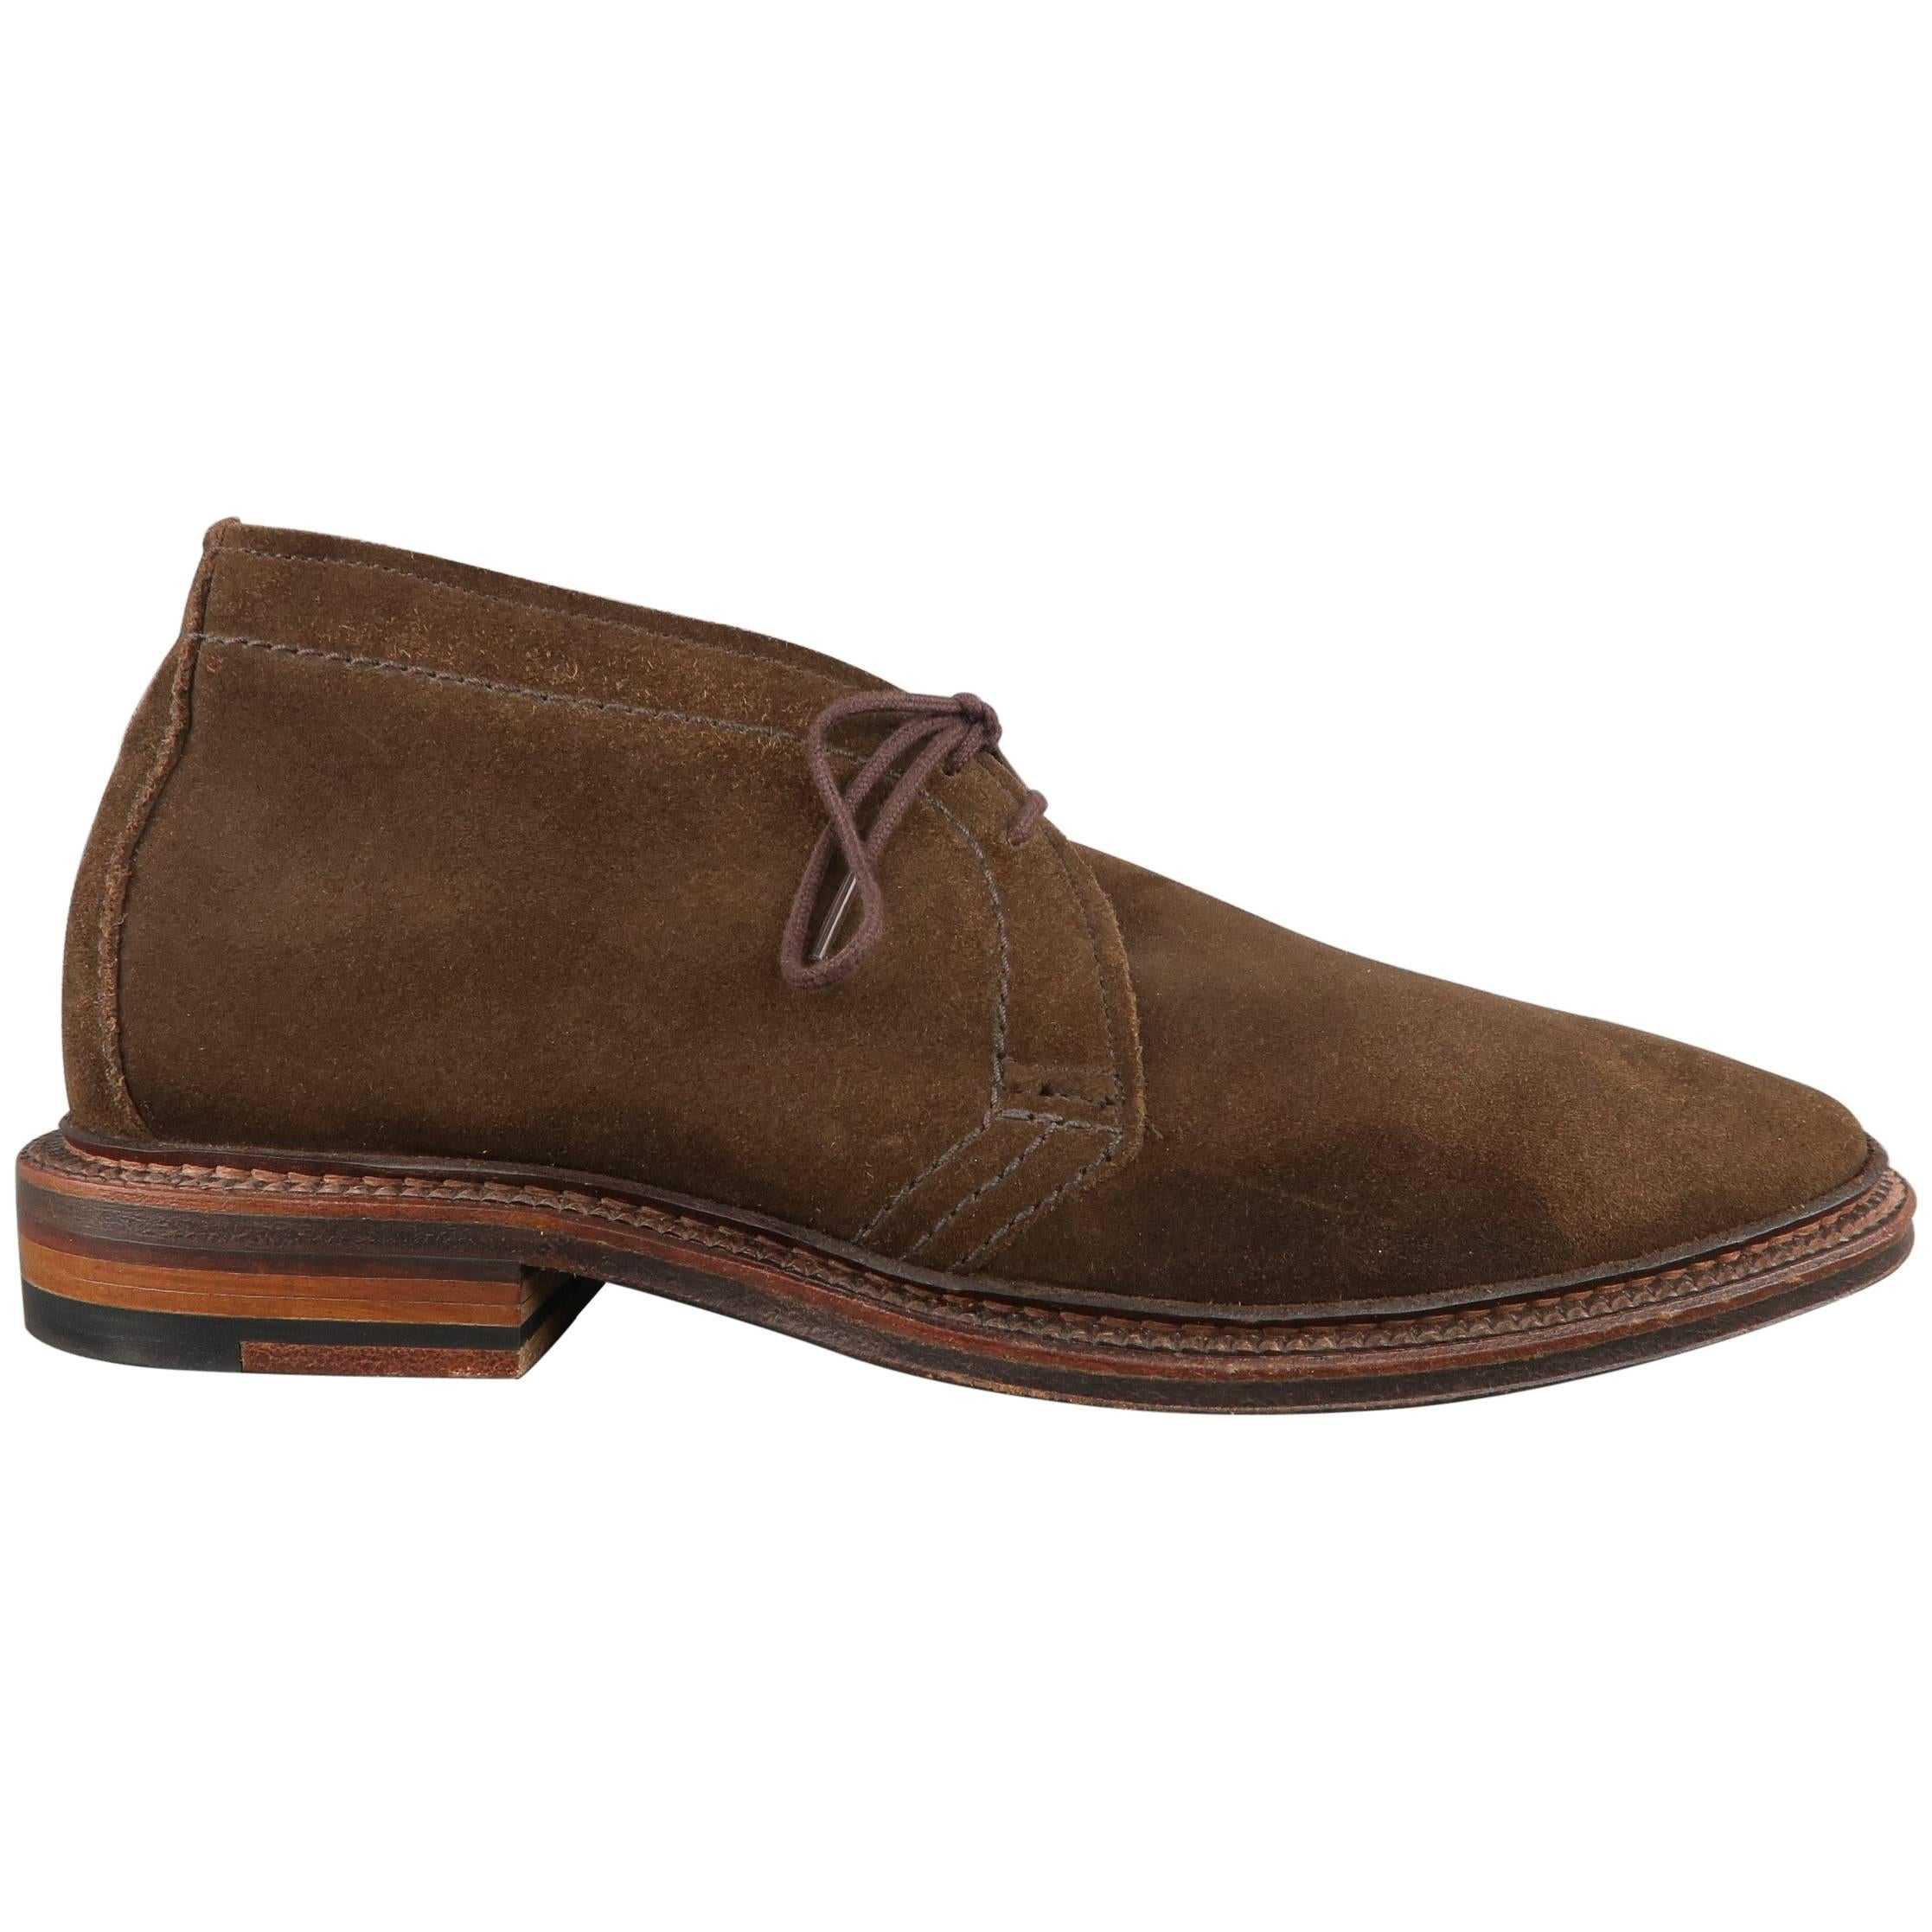 Men's ALDEN Size 7.5 Brown Suede Lace Up Desert Chukka Boots